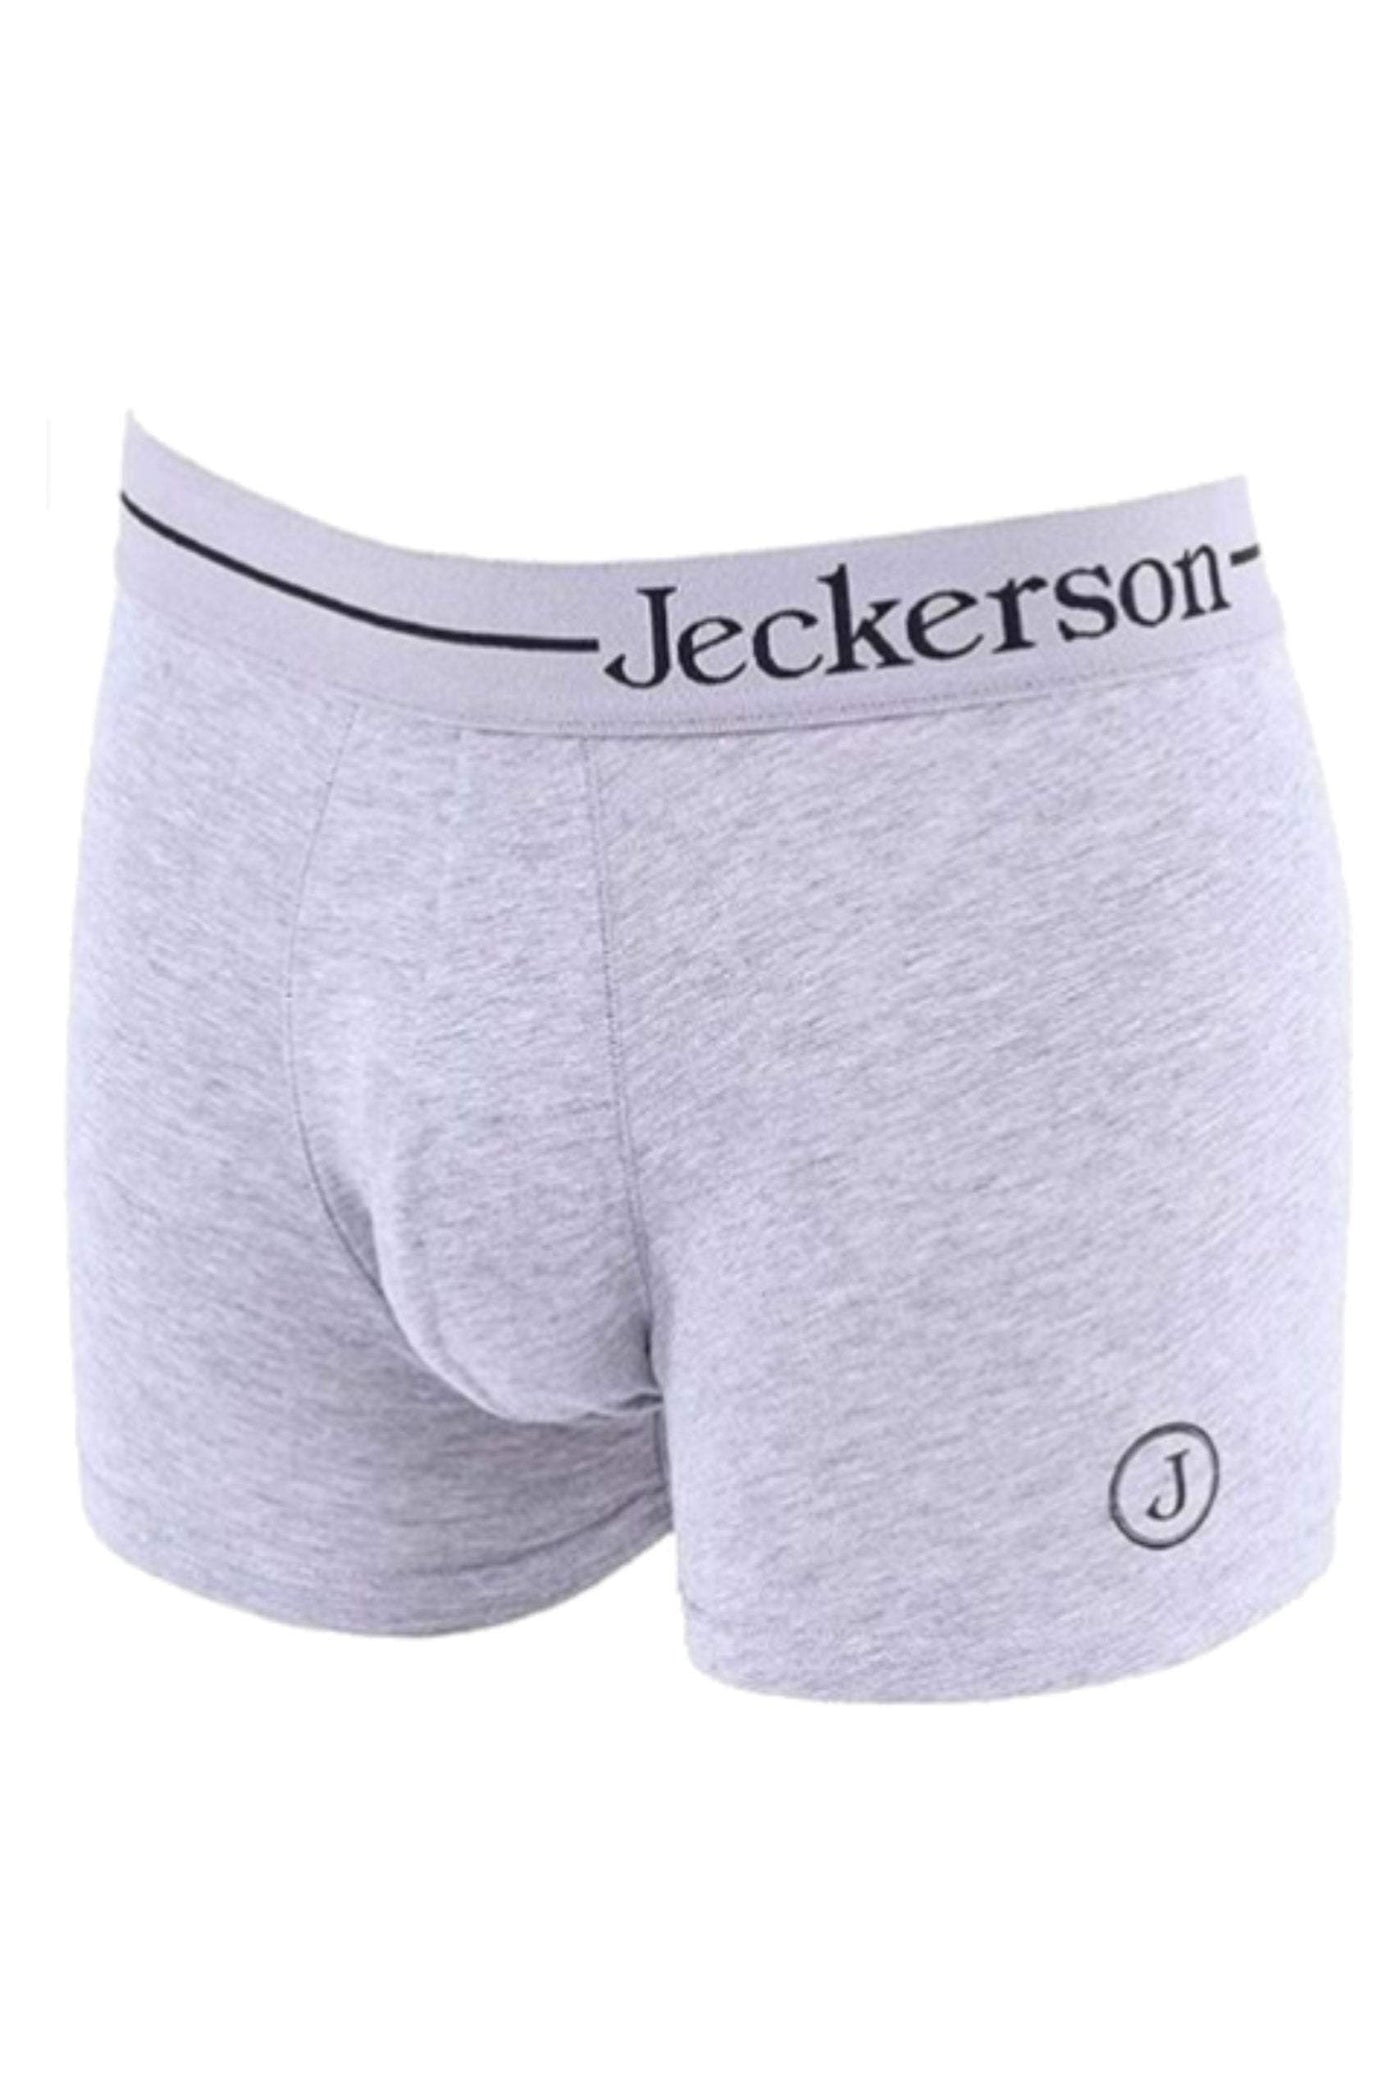 Jeckerson Gray Cotton Underwear #men, feed-1, Gray, Jeckerson, L, M, Underwear - Men - Clothing, XL, XXL at SEYMAYKA